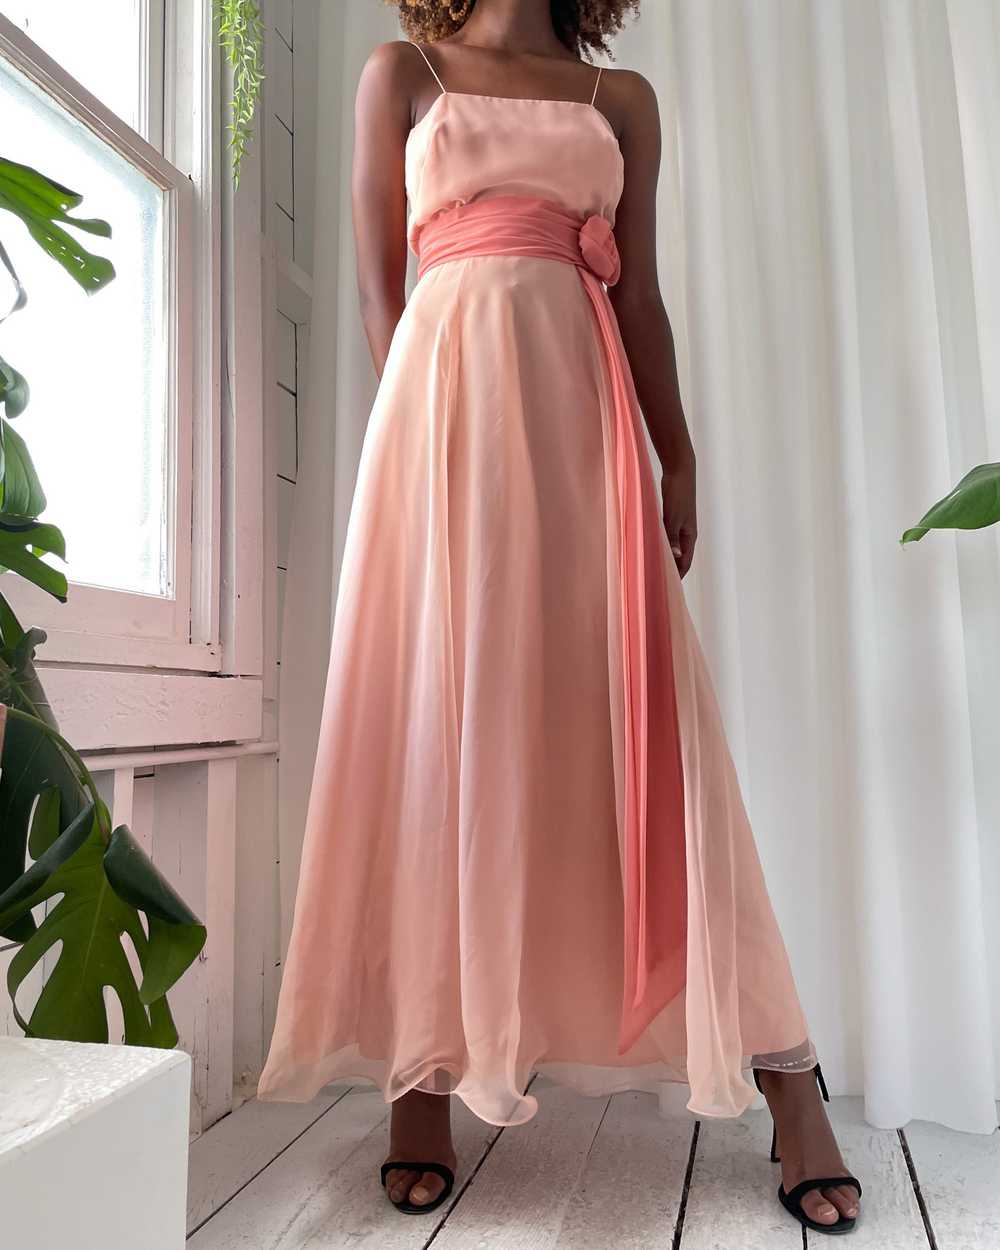 70s Peach Chiffon Gown - image 3